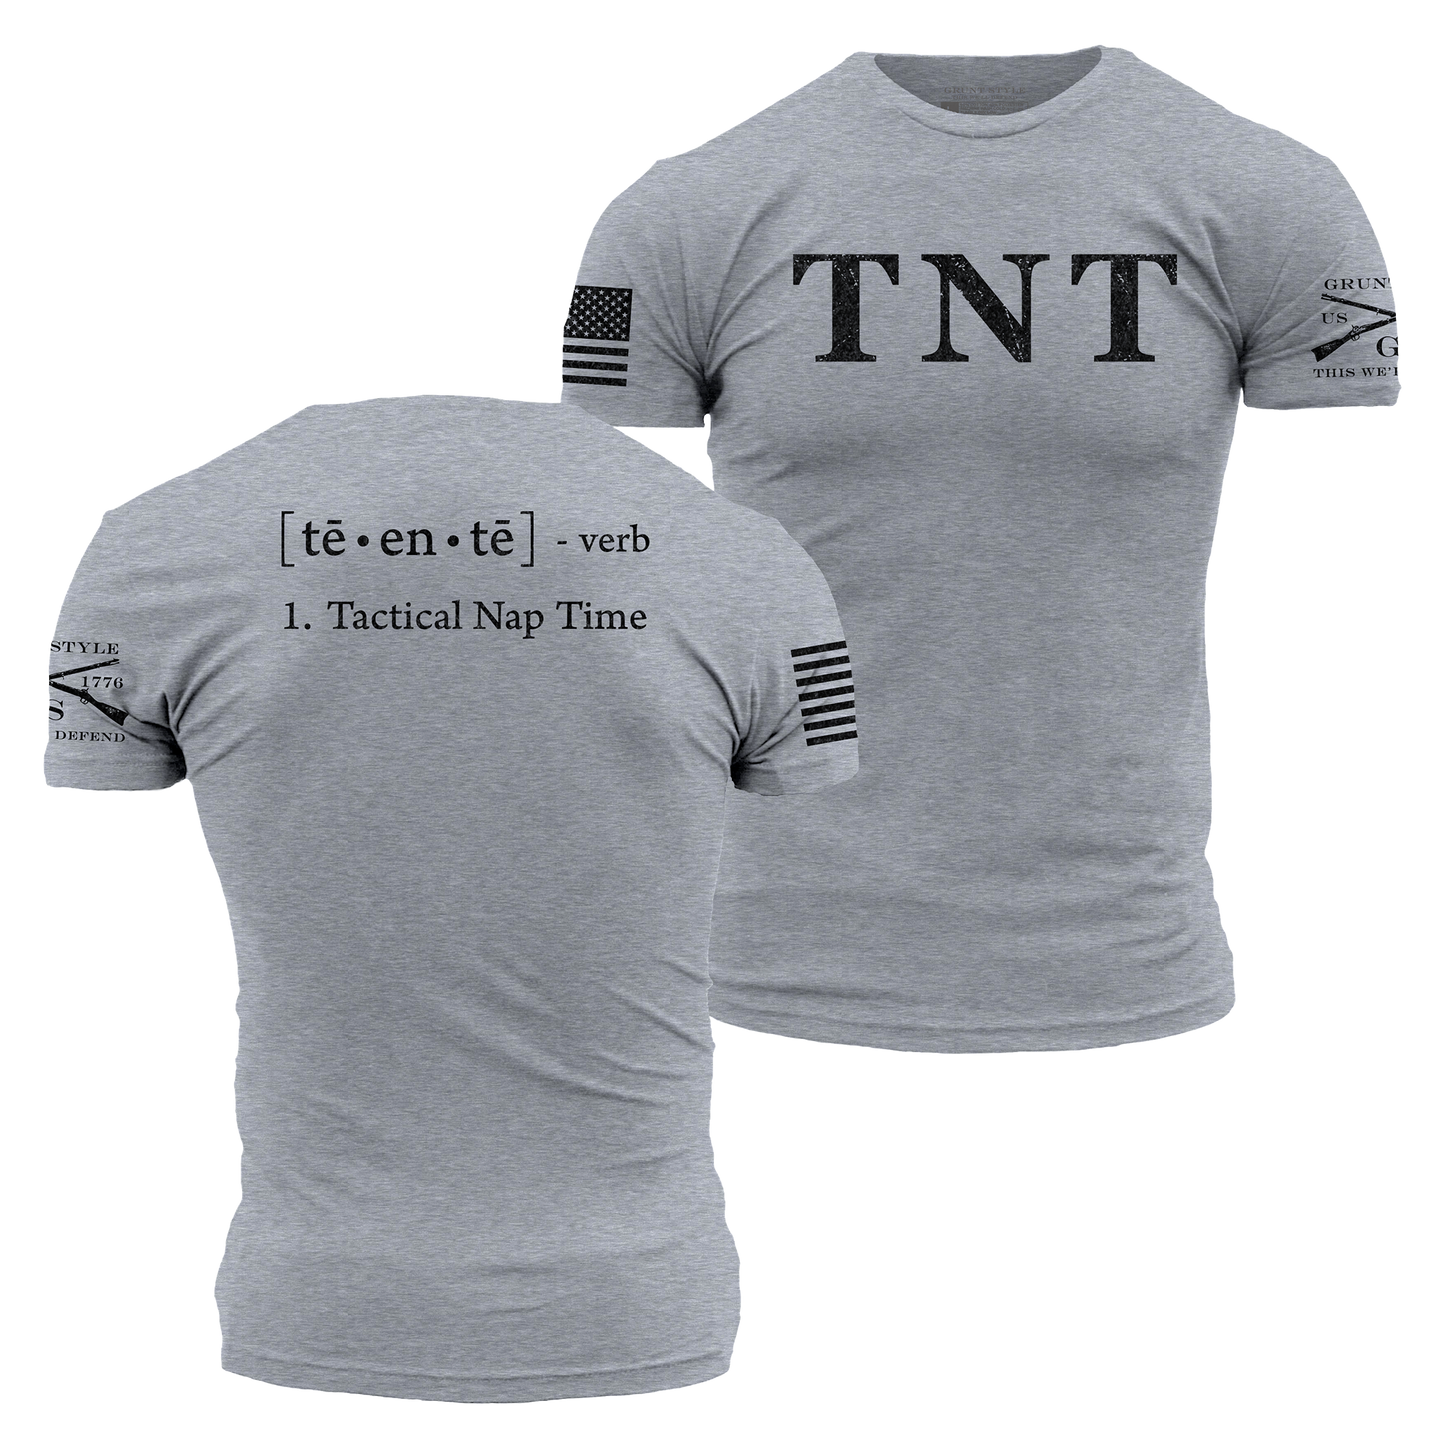 Military Shirt - TNT